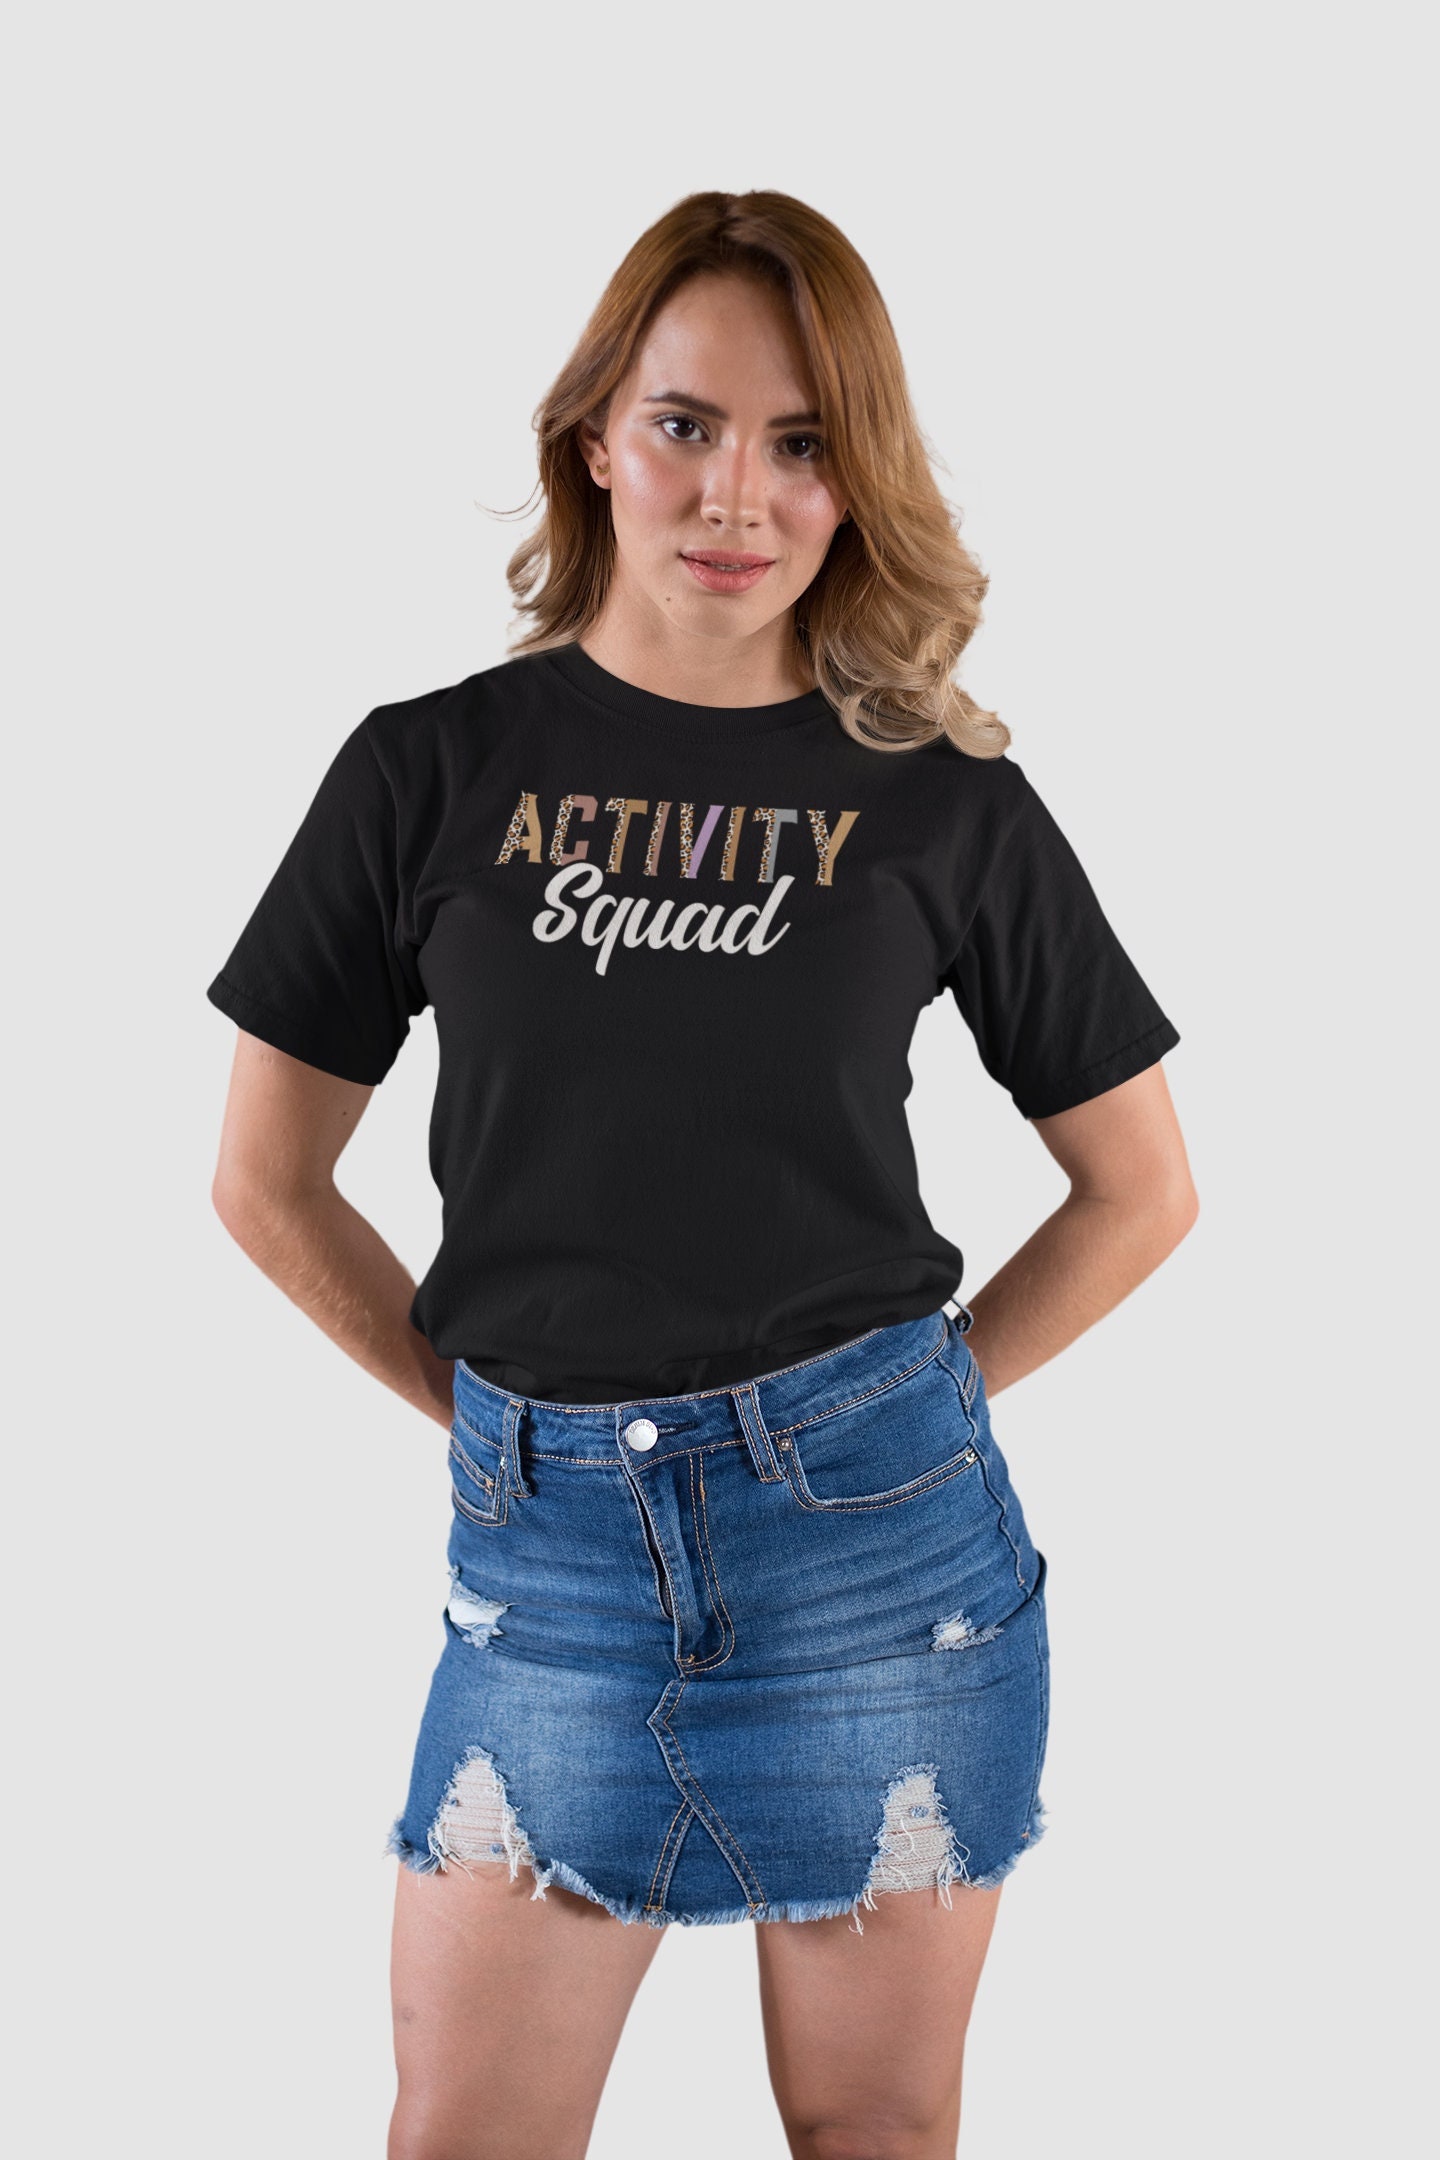 Activity Squad Shirt Activity Assistant Shirt Activity | Etsy